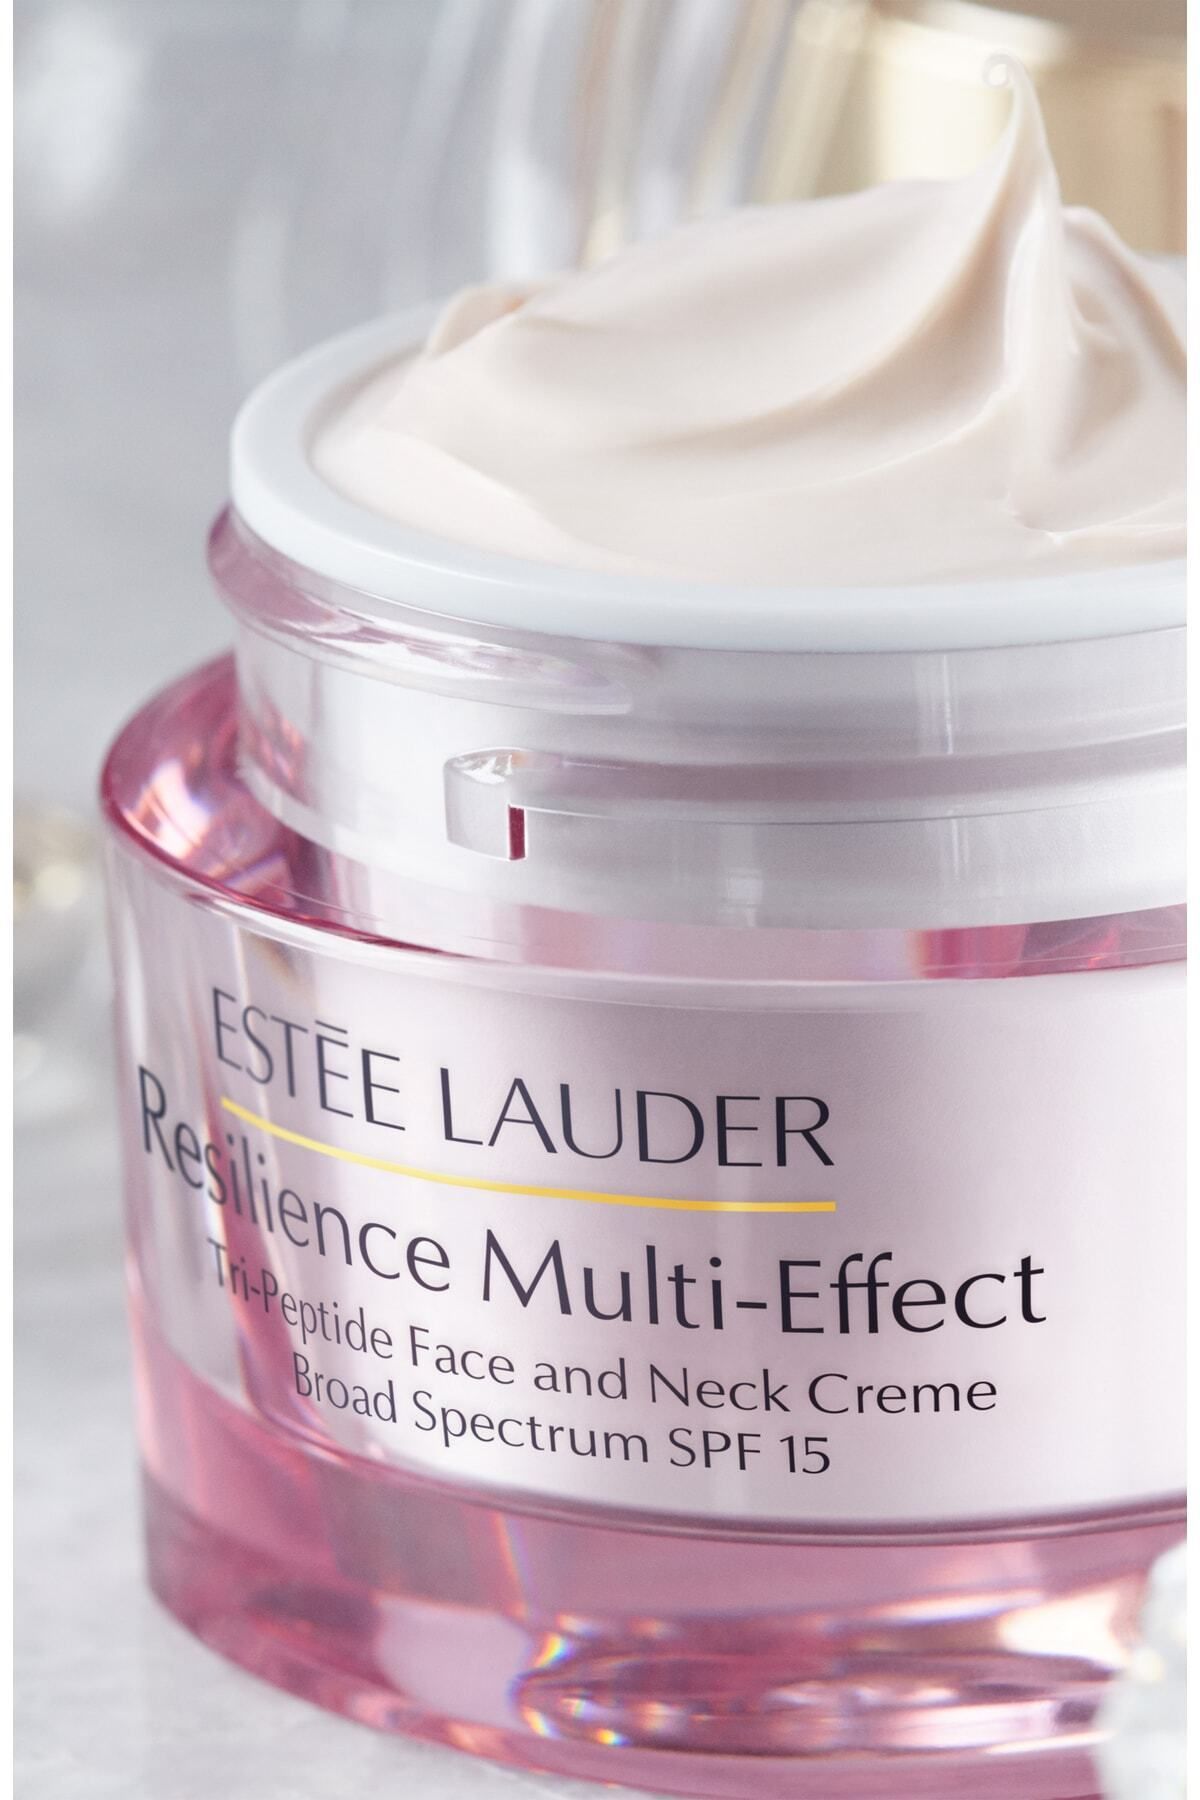 Estee Lauder کرم مراقبت از چهره و گردن Resilience Multi Effect SPF 15 با اثر چندگانه 50 میلی لیتر